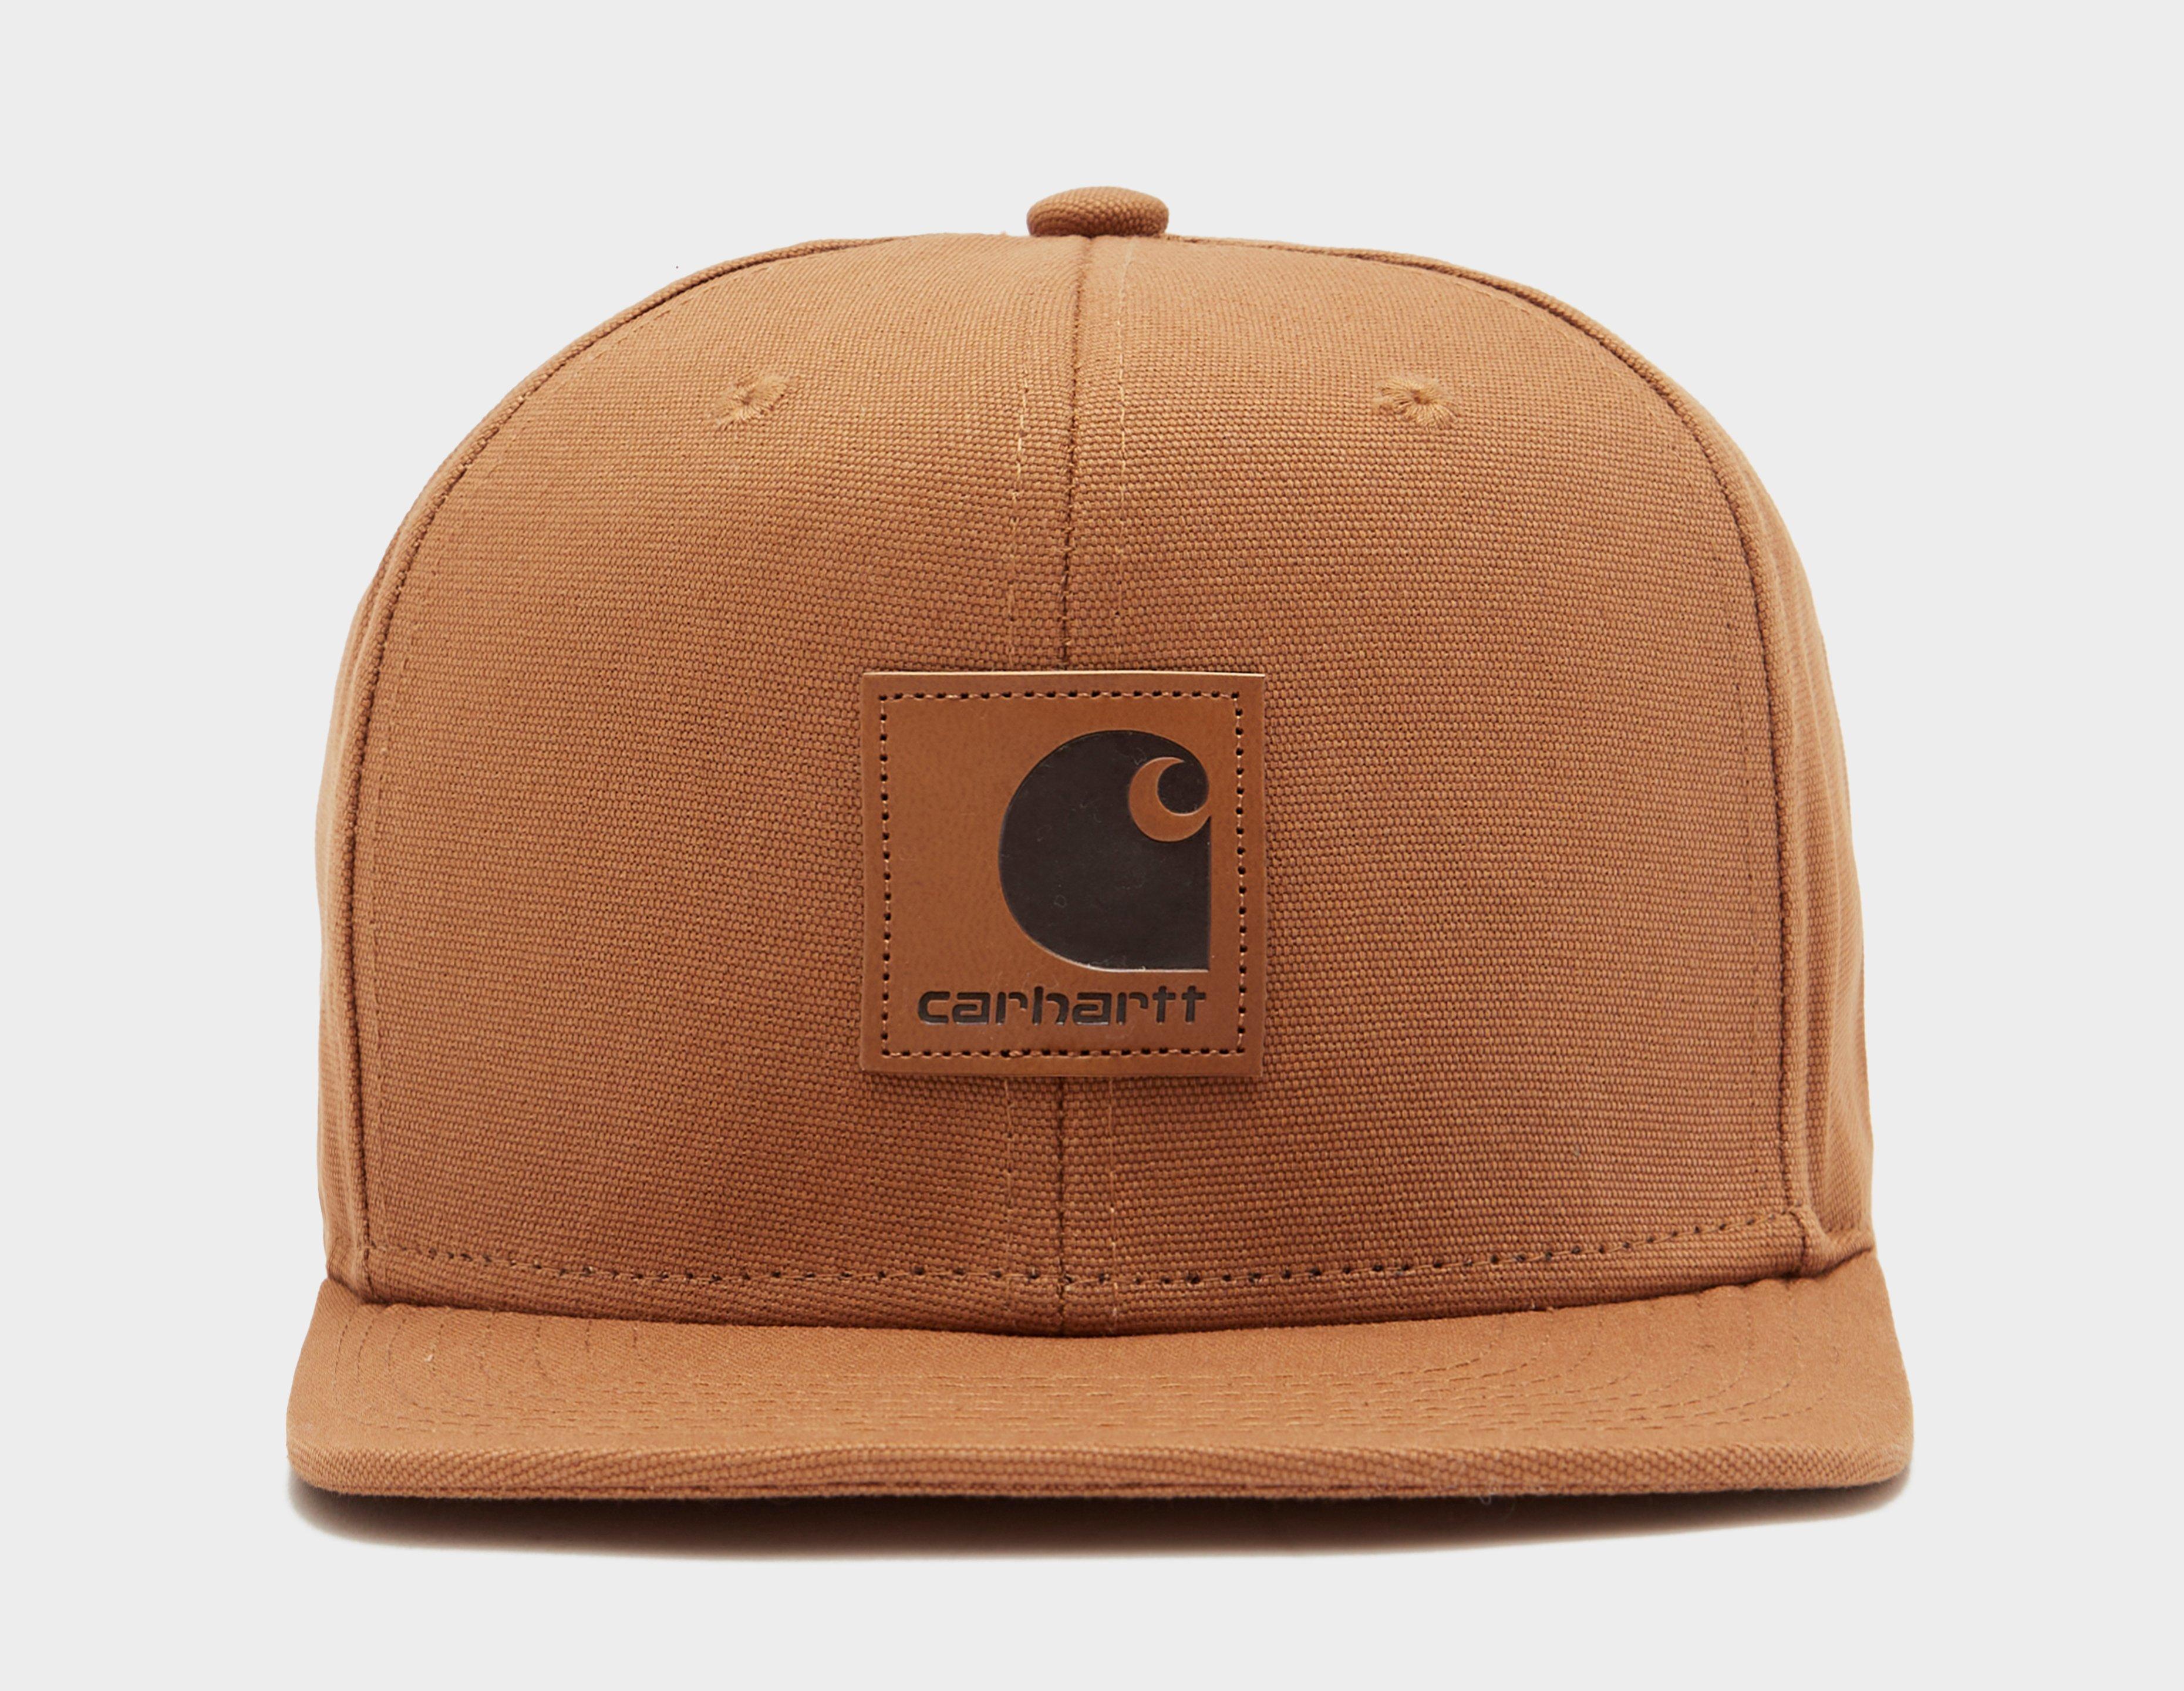 Monetair sla Downtown caps key-chains robes mats eyewear | Carhartt WIP Logo Cap